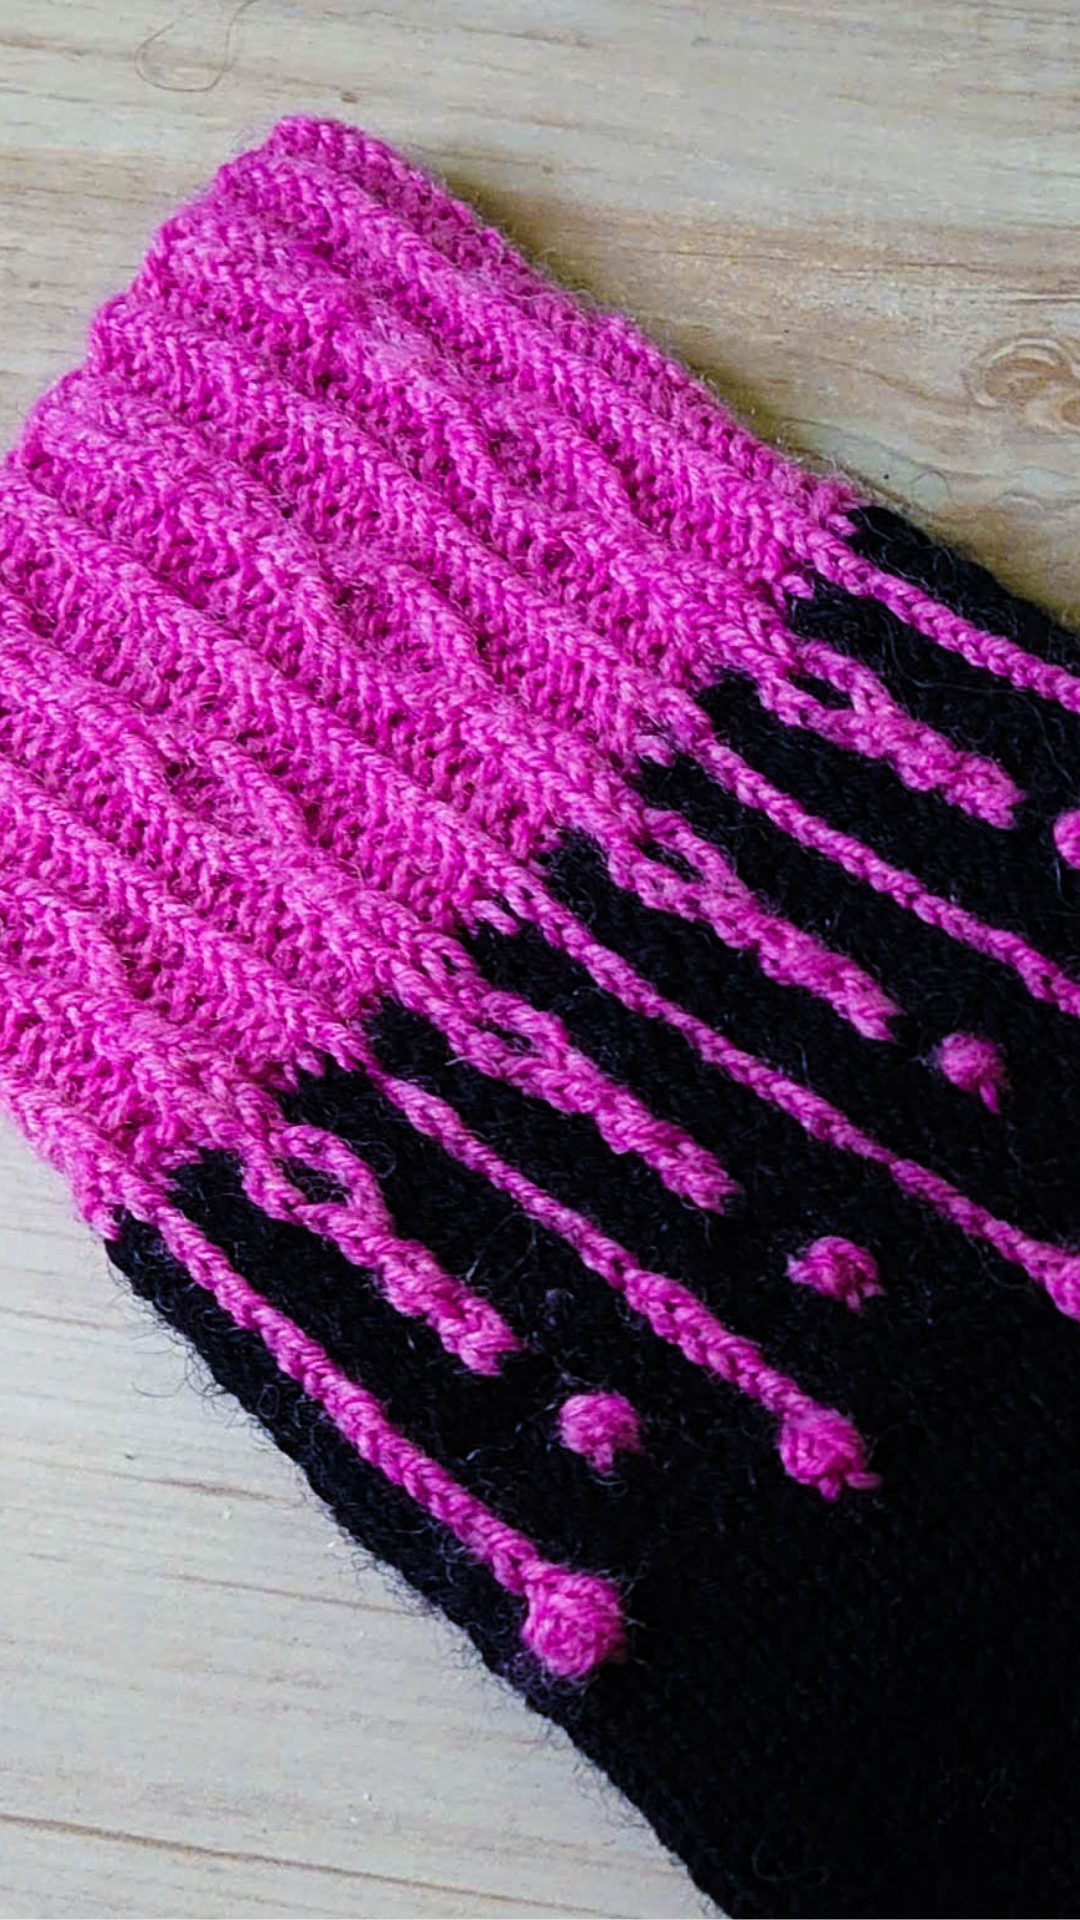 Bleeding Colors - Intarsia Cables Sock Knitting Pattern